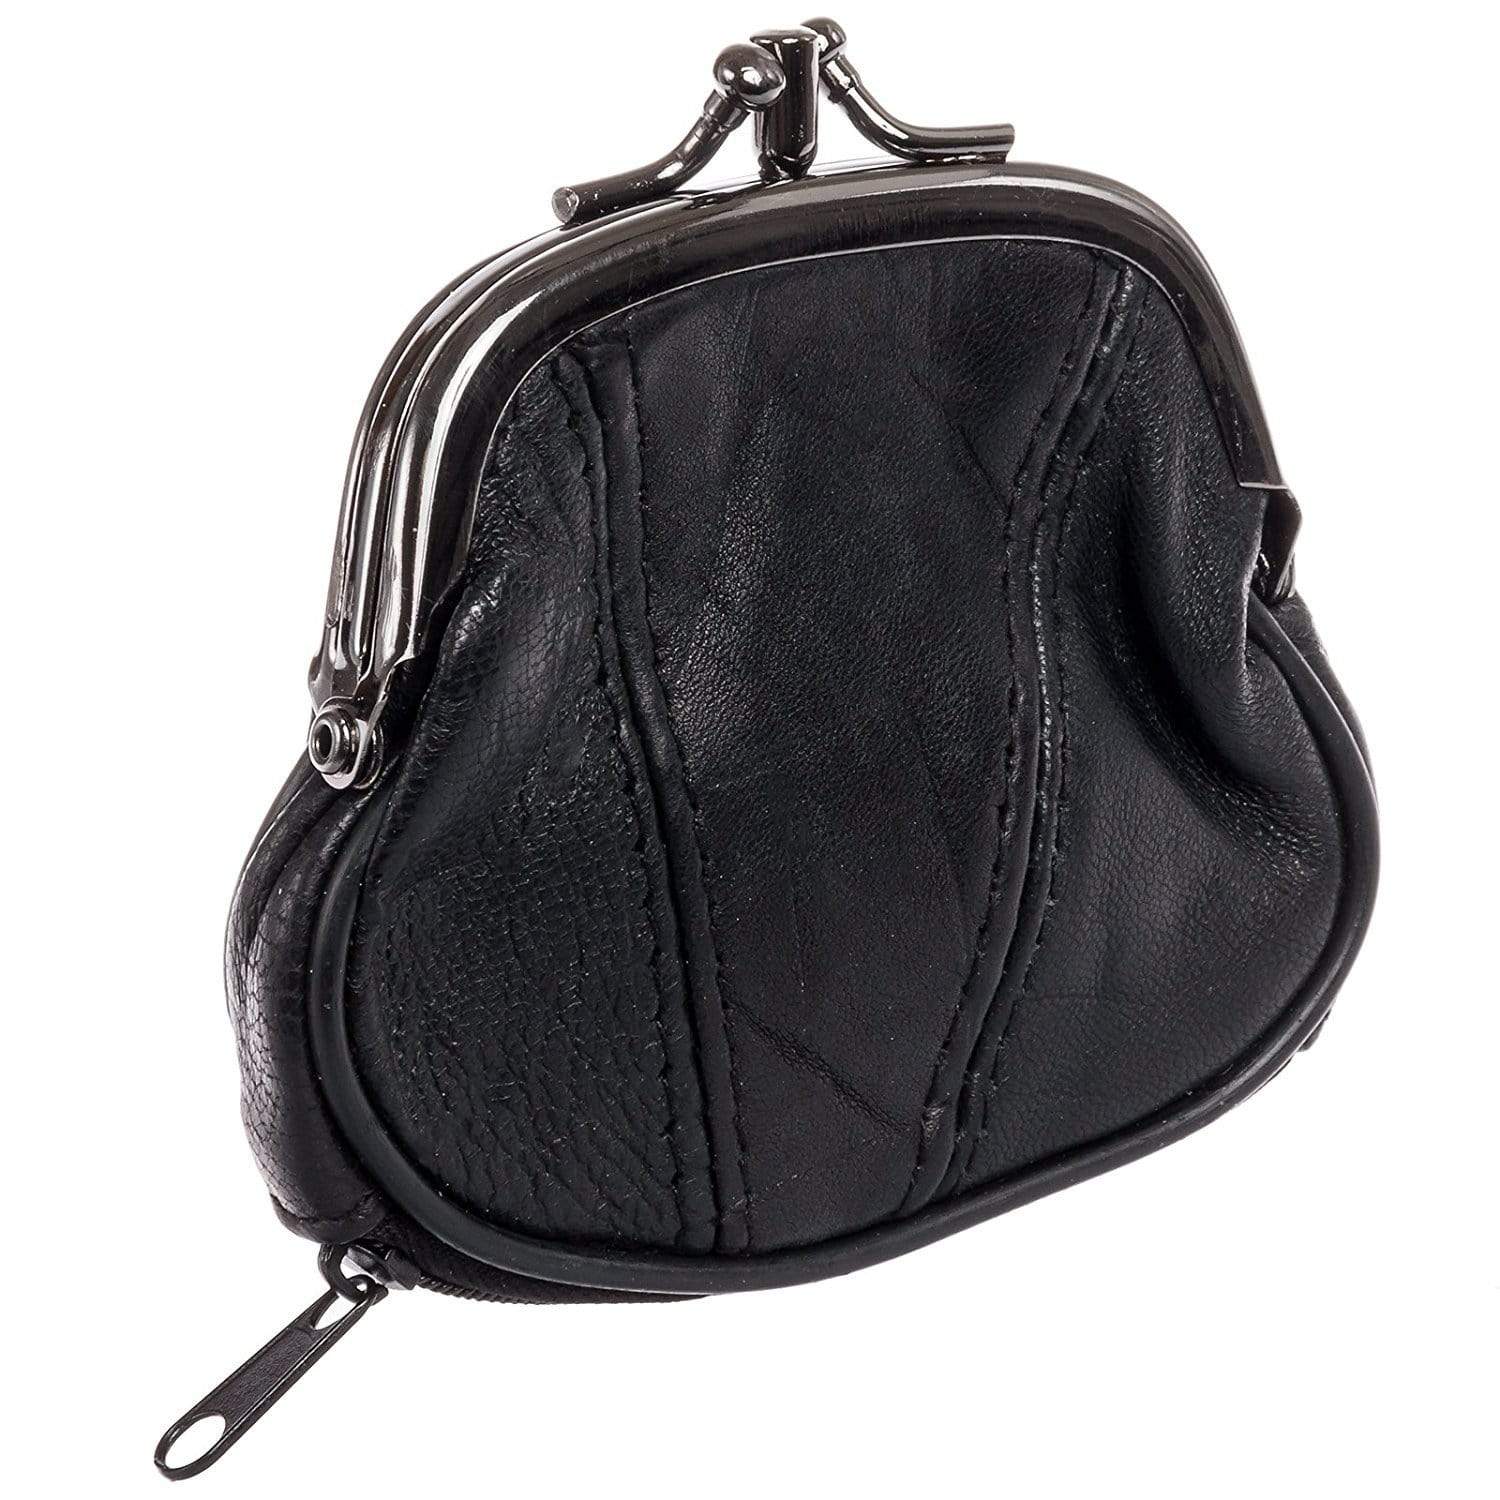 Leather coin purse, cute double zipper coin purse - Walmart.com